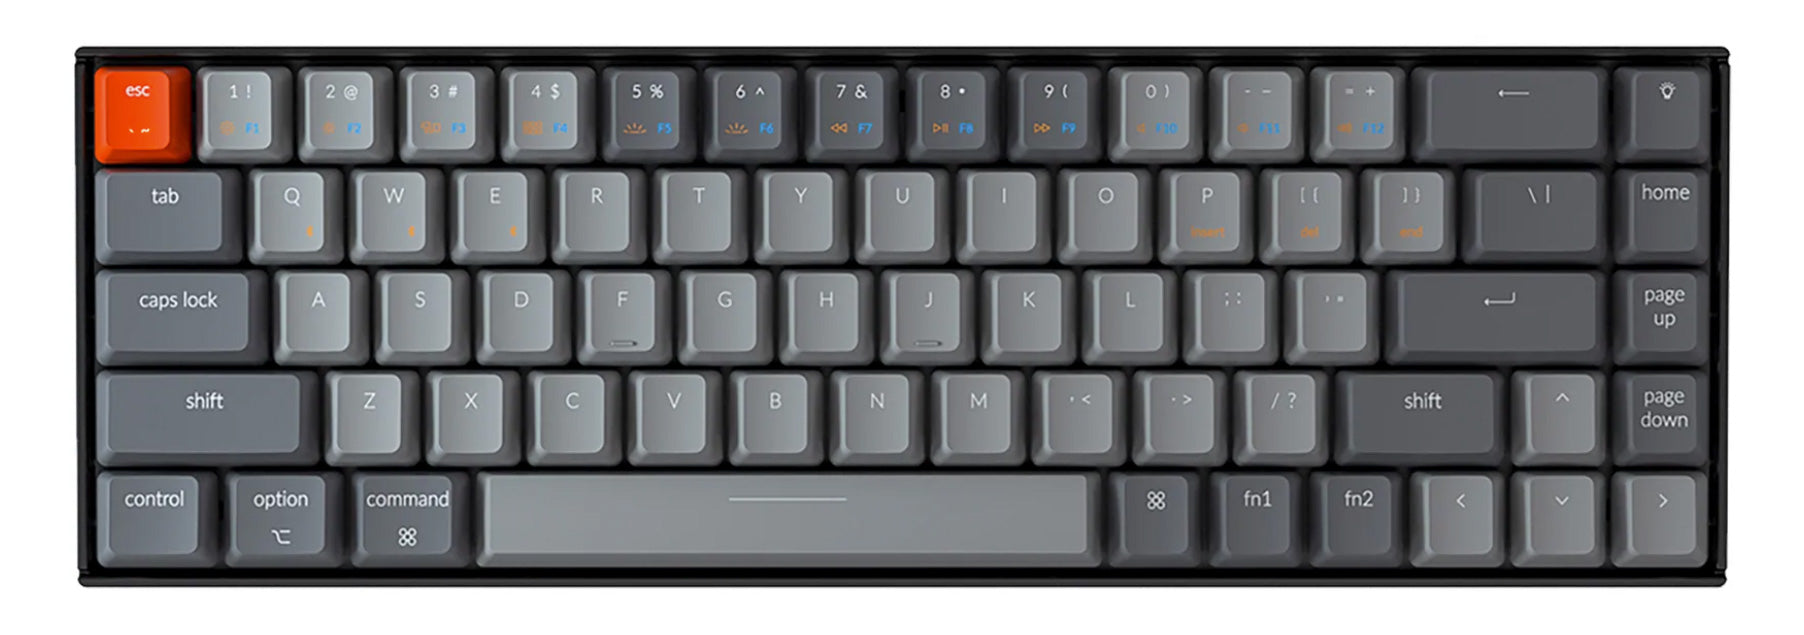 Keychron K6 compact 65 percent wireless mechanical keyboard for Mac Windows iOS